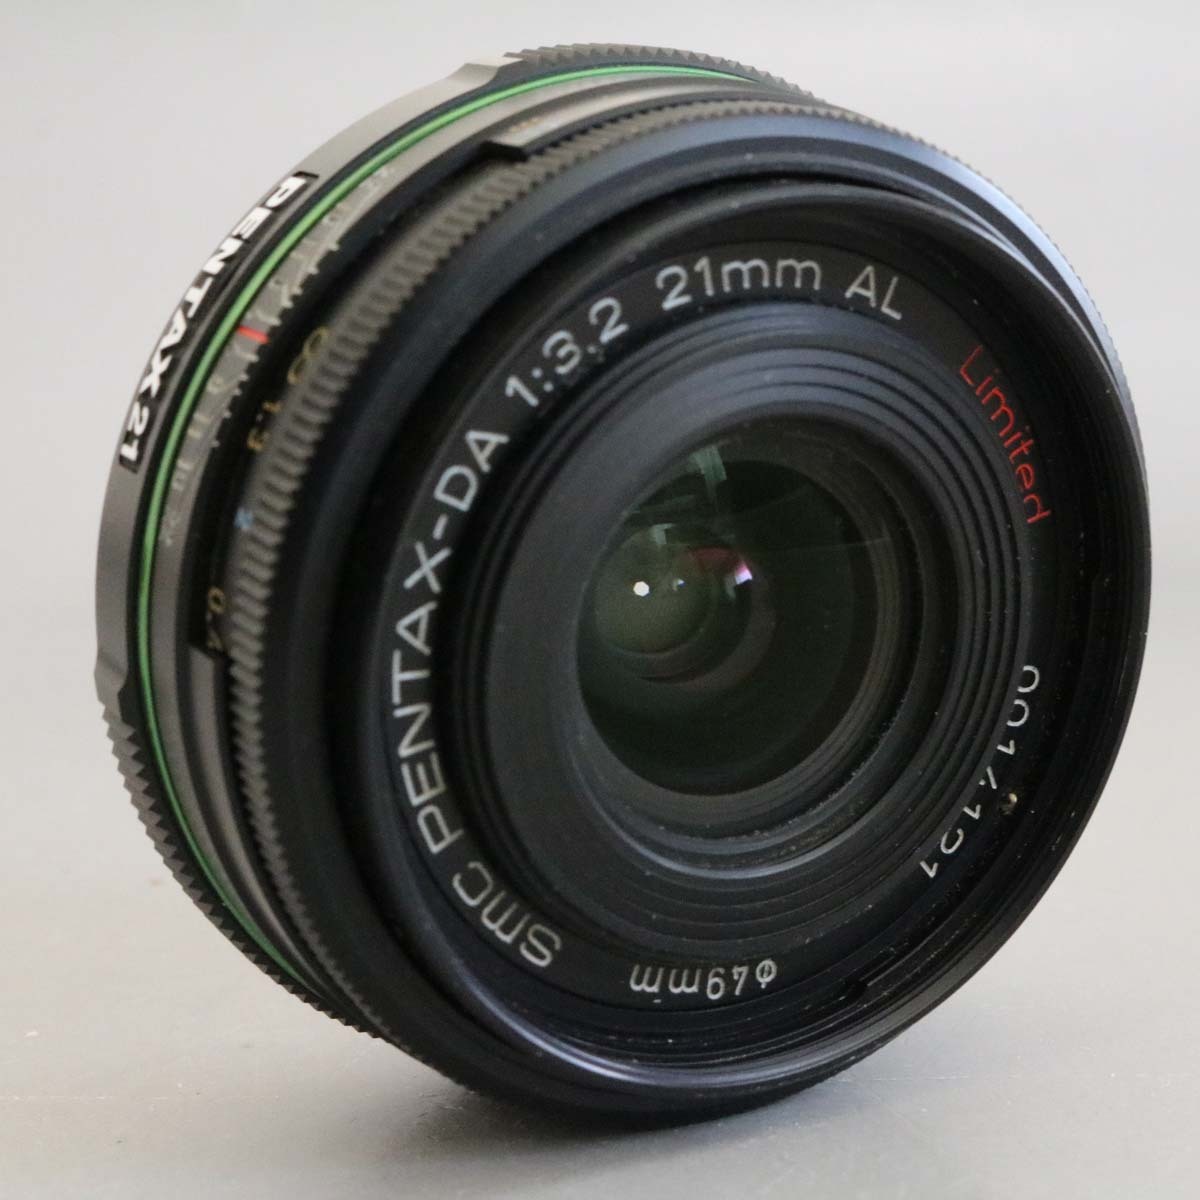 ③PENTAX smc PENTAX-DA 1:3.2 21mm AL Limited lens details unknown operation not yet verification 